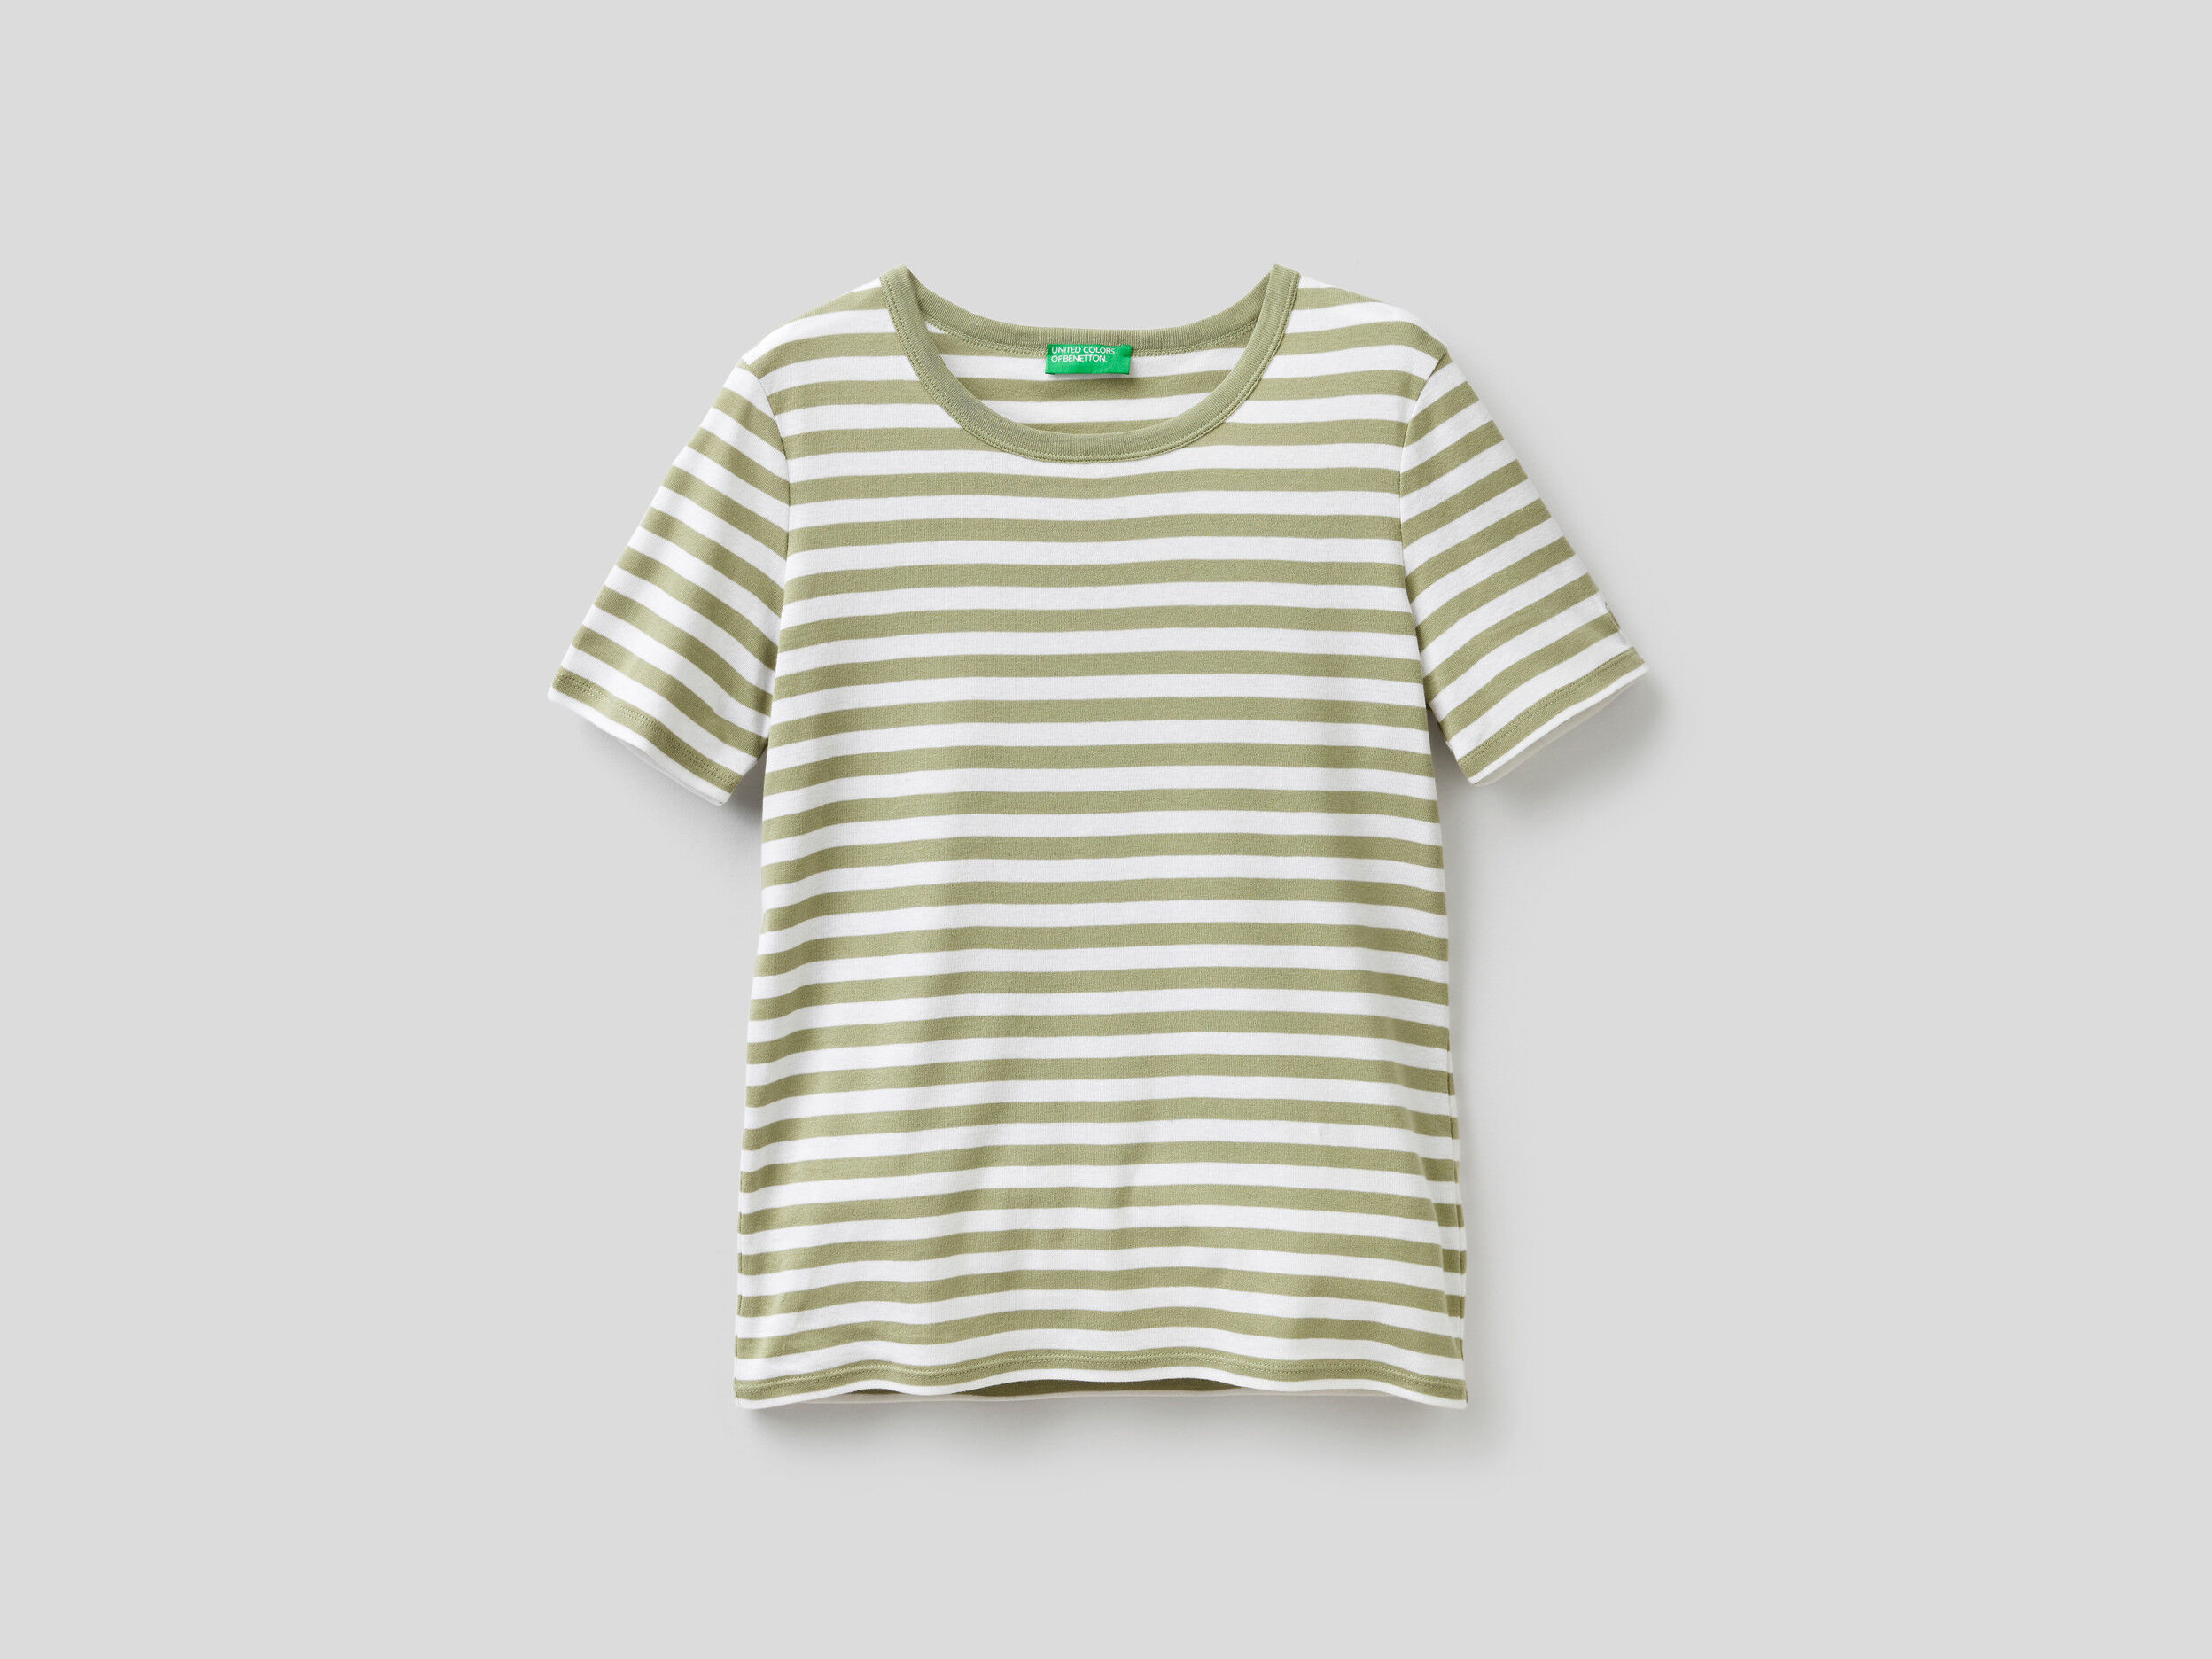 MODA DONNA Camicie & T-shirt T-shirt Stampato Benetton T-shirt sconto 58% Grigio/Bianco XS 